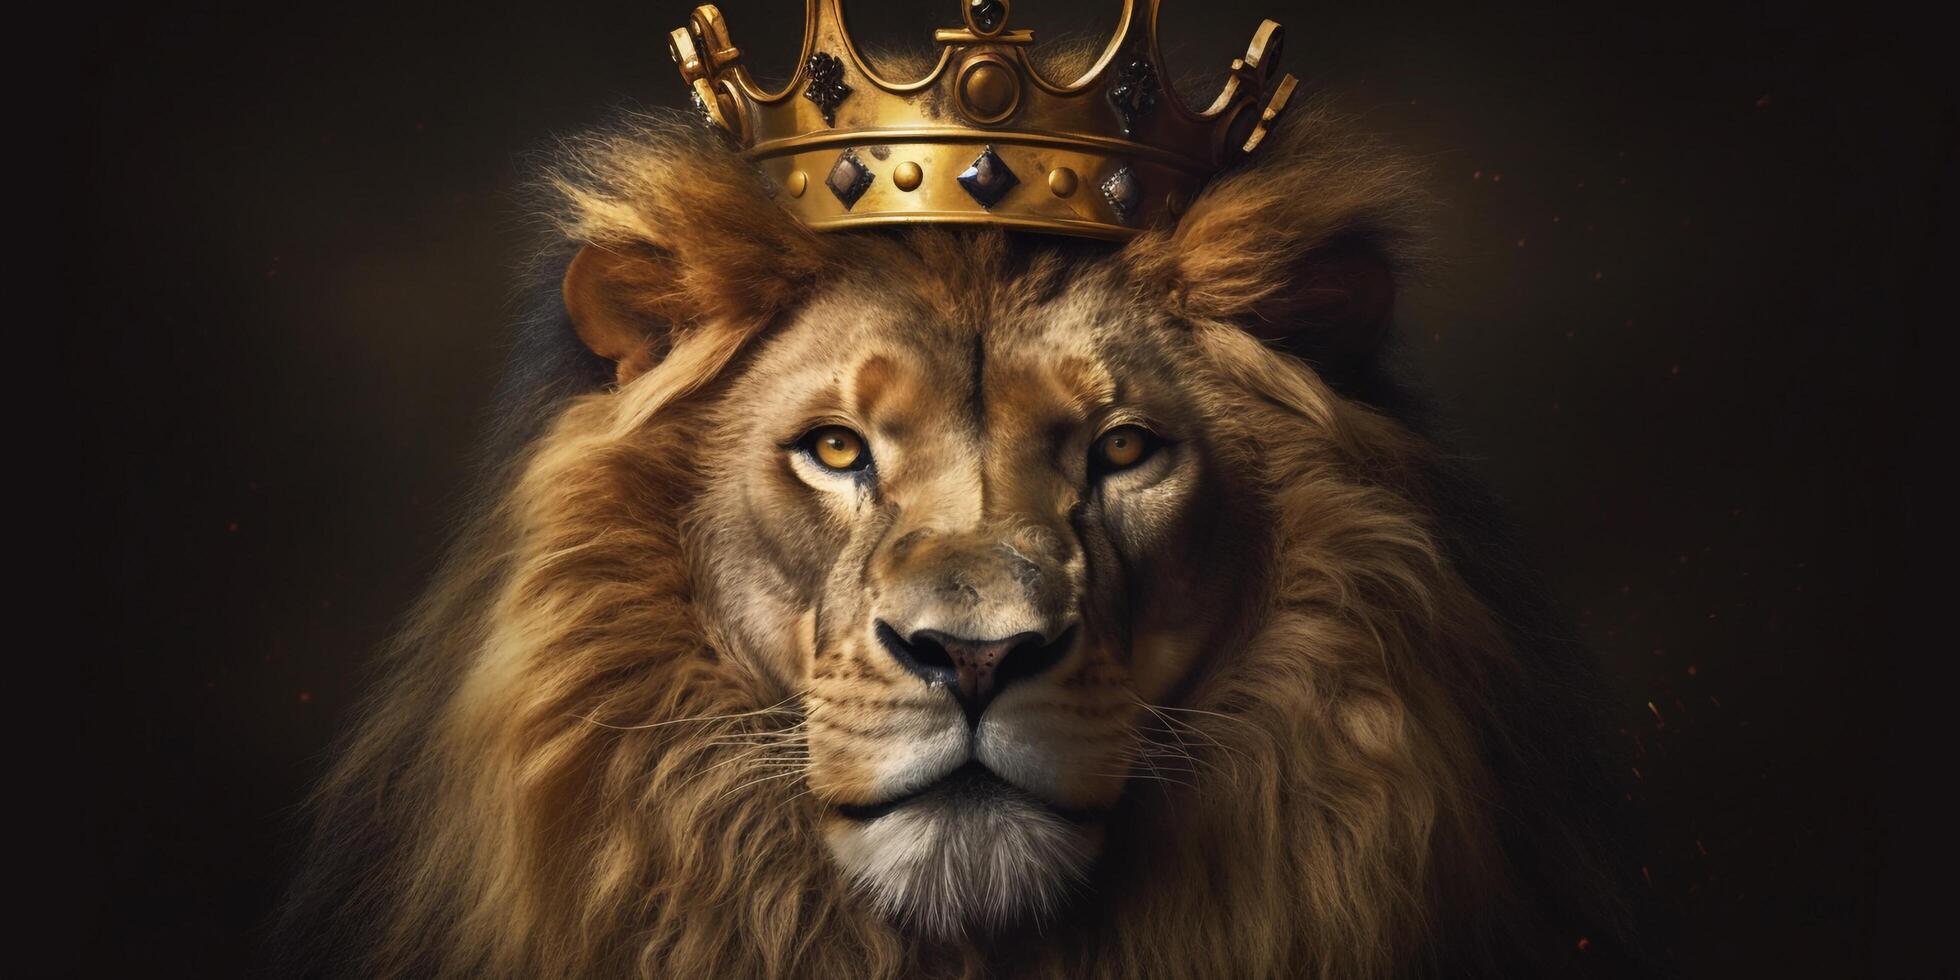 león Rey en un dorado corona en un oscuro antecedentes con ai generado. foto